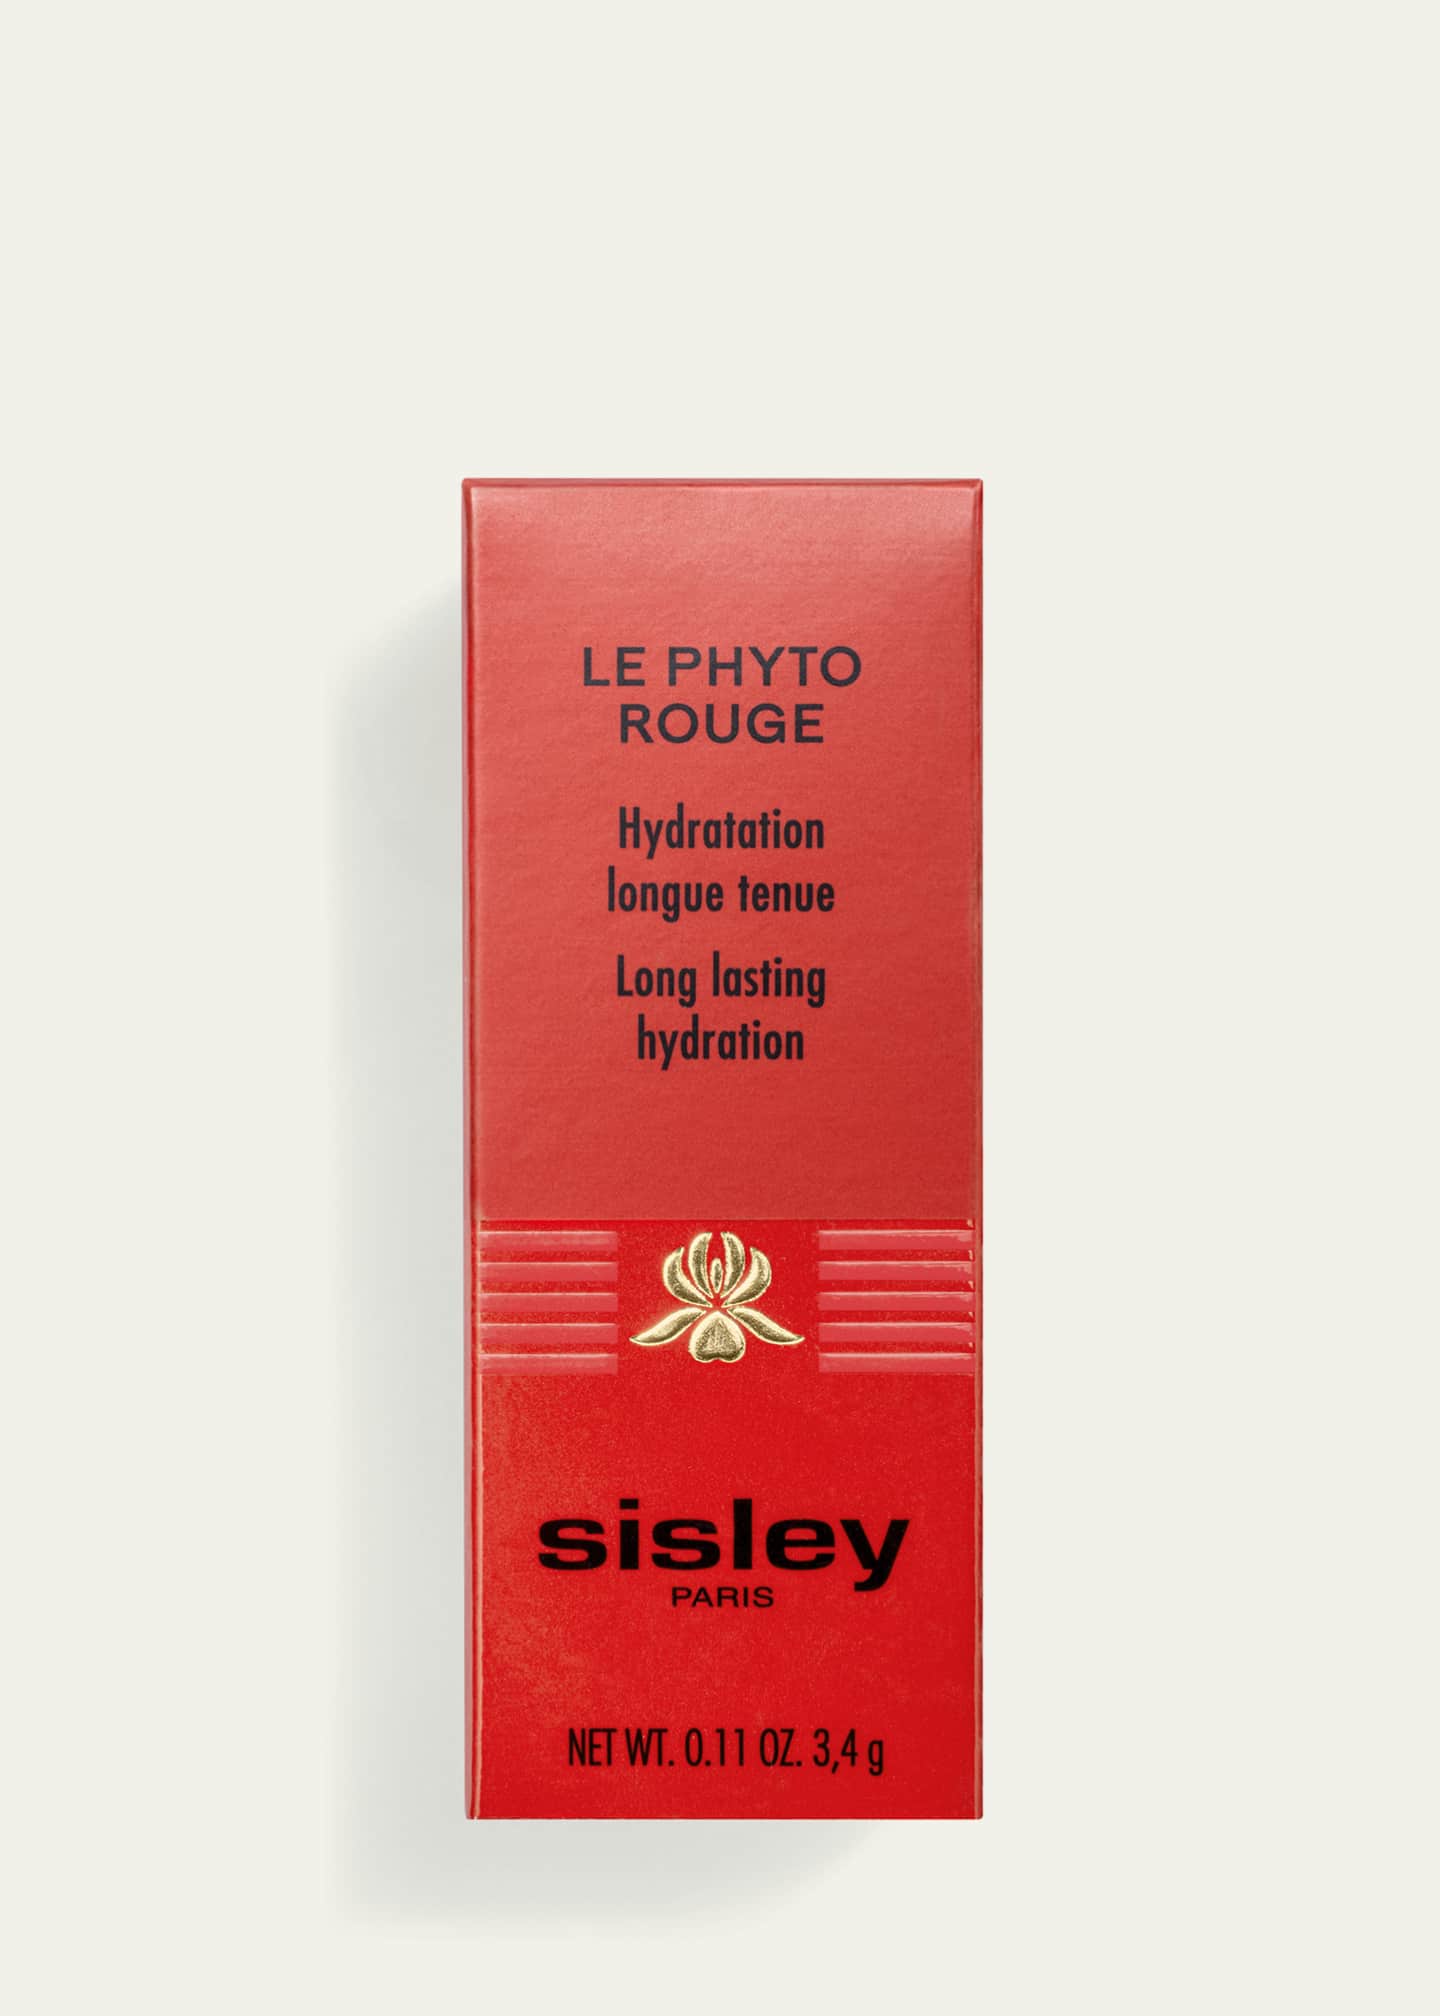 Sisley-Paris Le Phyto-Rouge Lipstick Image 6 of 6